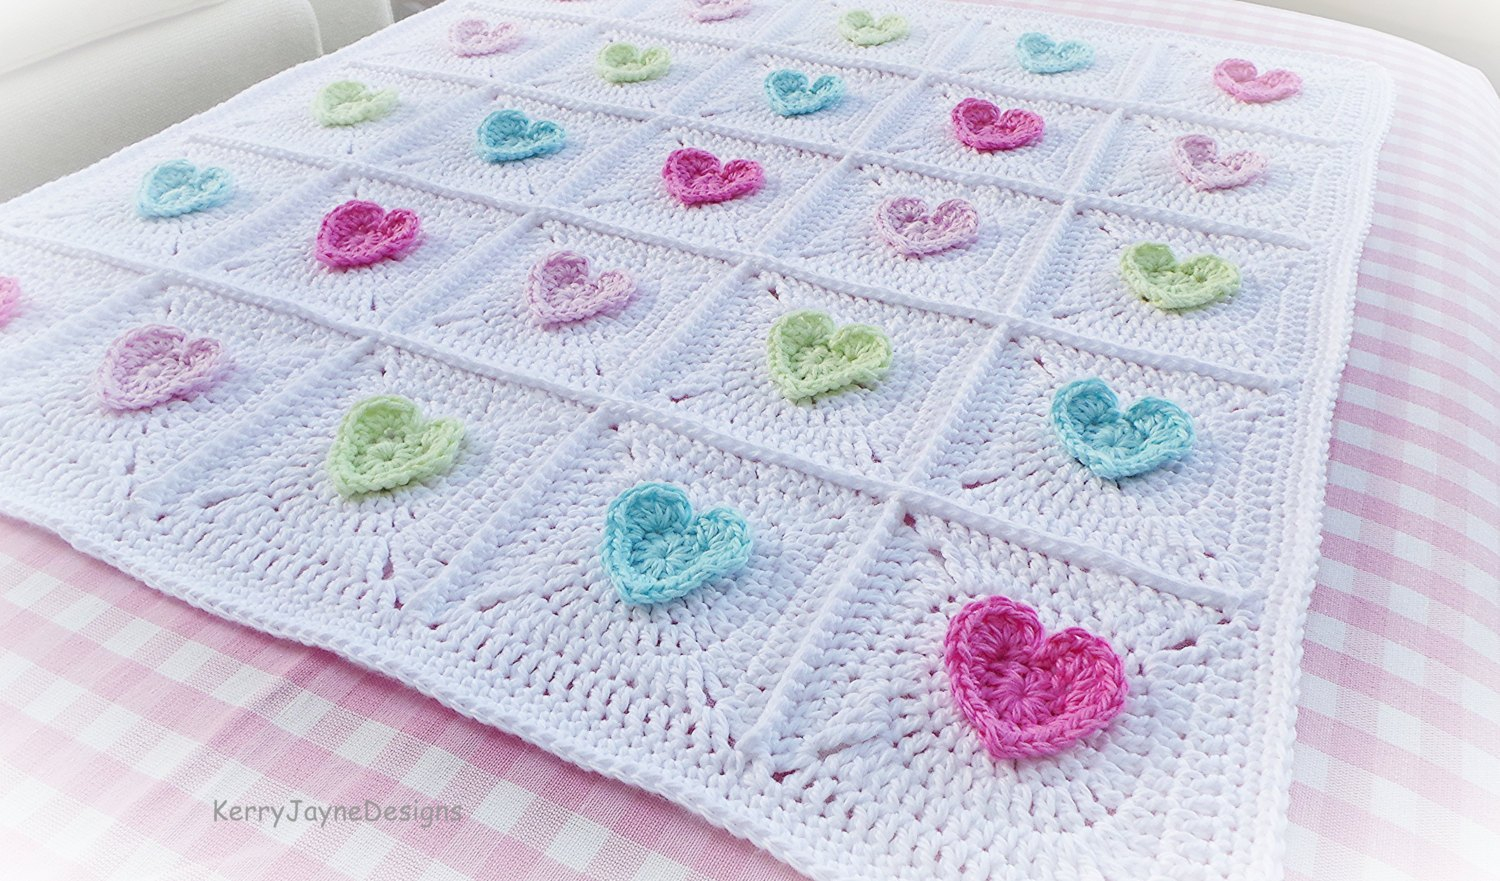 Free Baby Knitting Patterns Pinterest Topic For Pinterest Knitting Patterns Ba Blankets Free Crochet